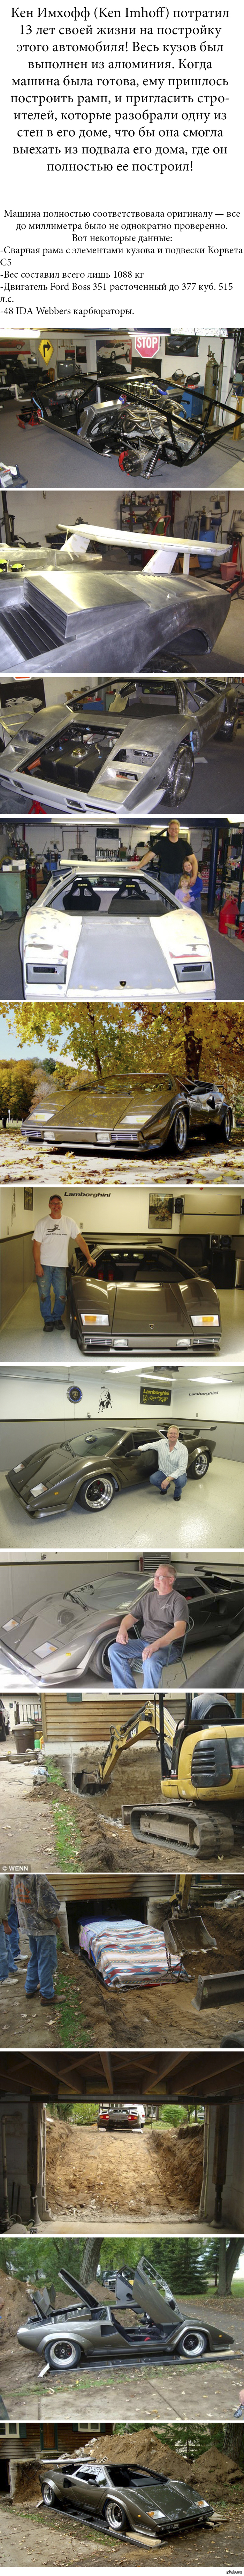      1980 Lamborghini Countach    Ebay  $77.600 